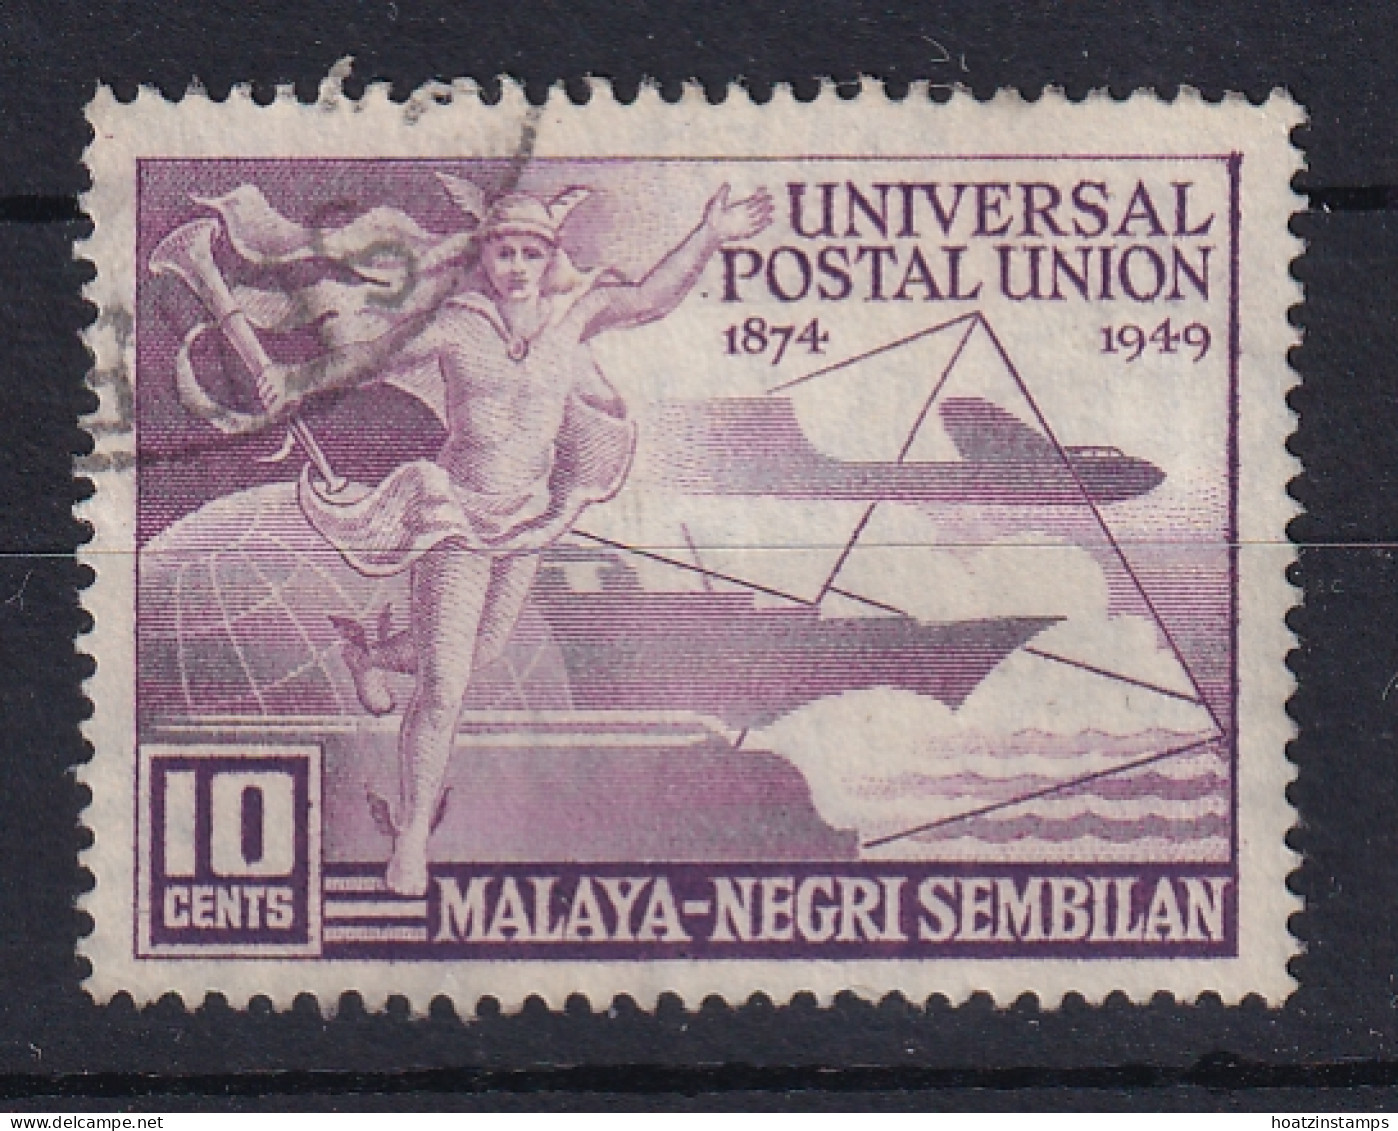 Malaya - Negri Sembilan: 1949   U.P.U.   SG63   10c   Used - Negri Sembilan